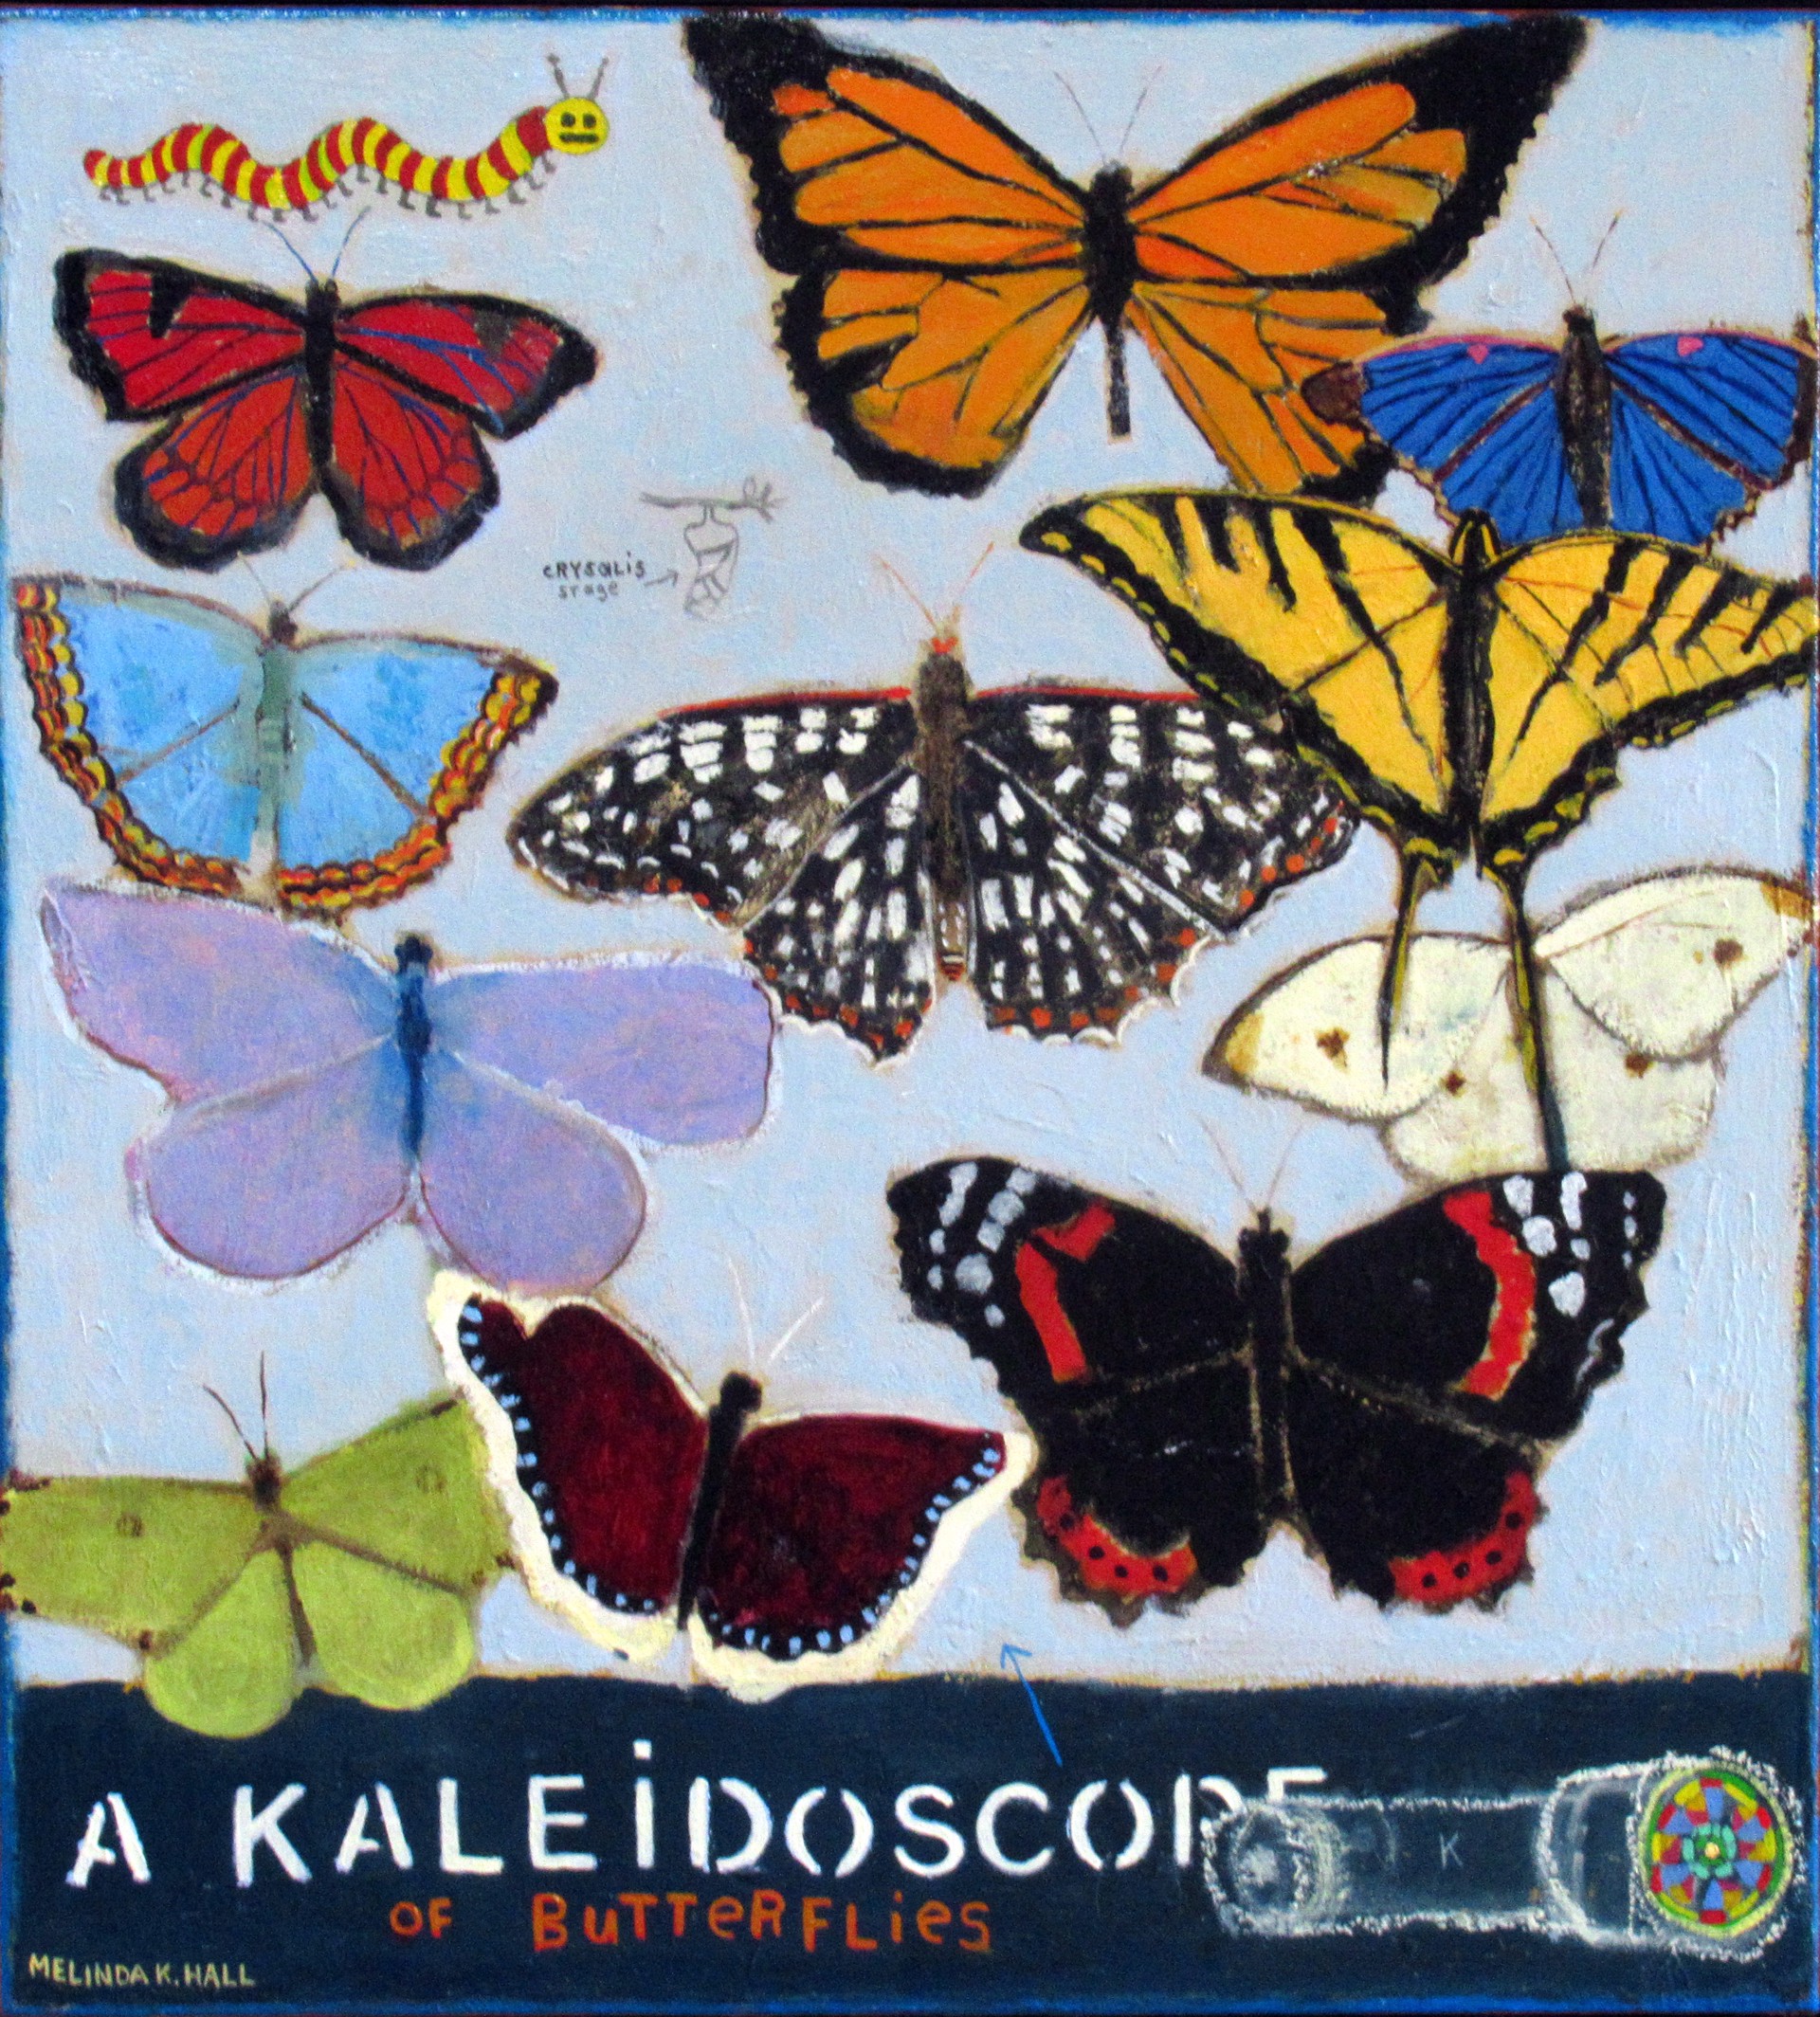 A Kaleidoscope of Butterflies by Melinda K. Hall